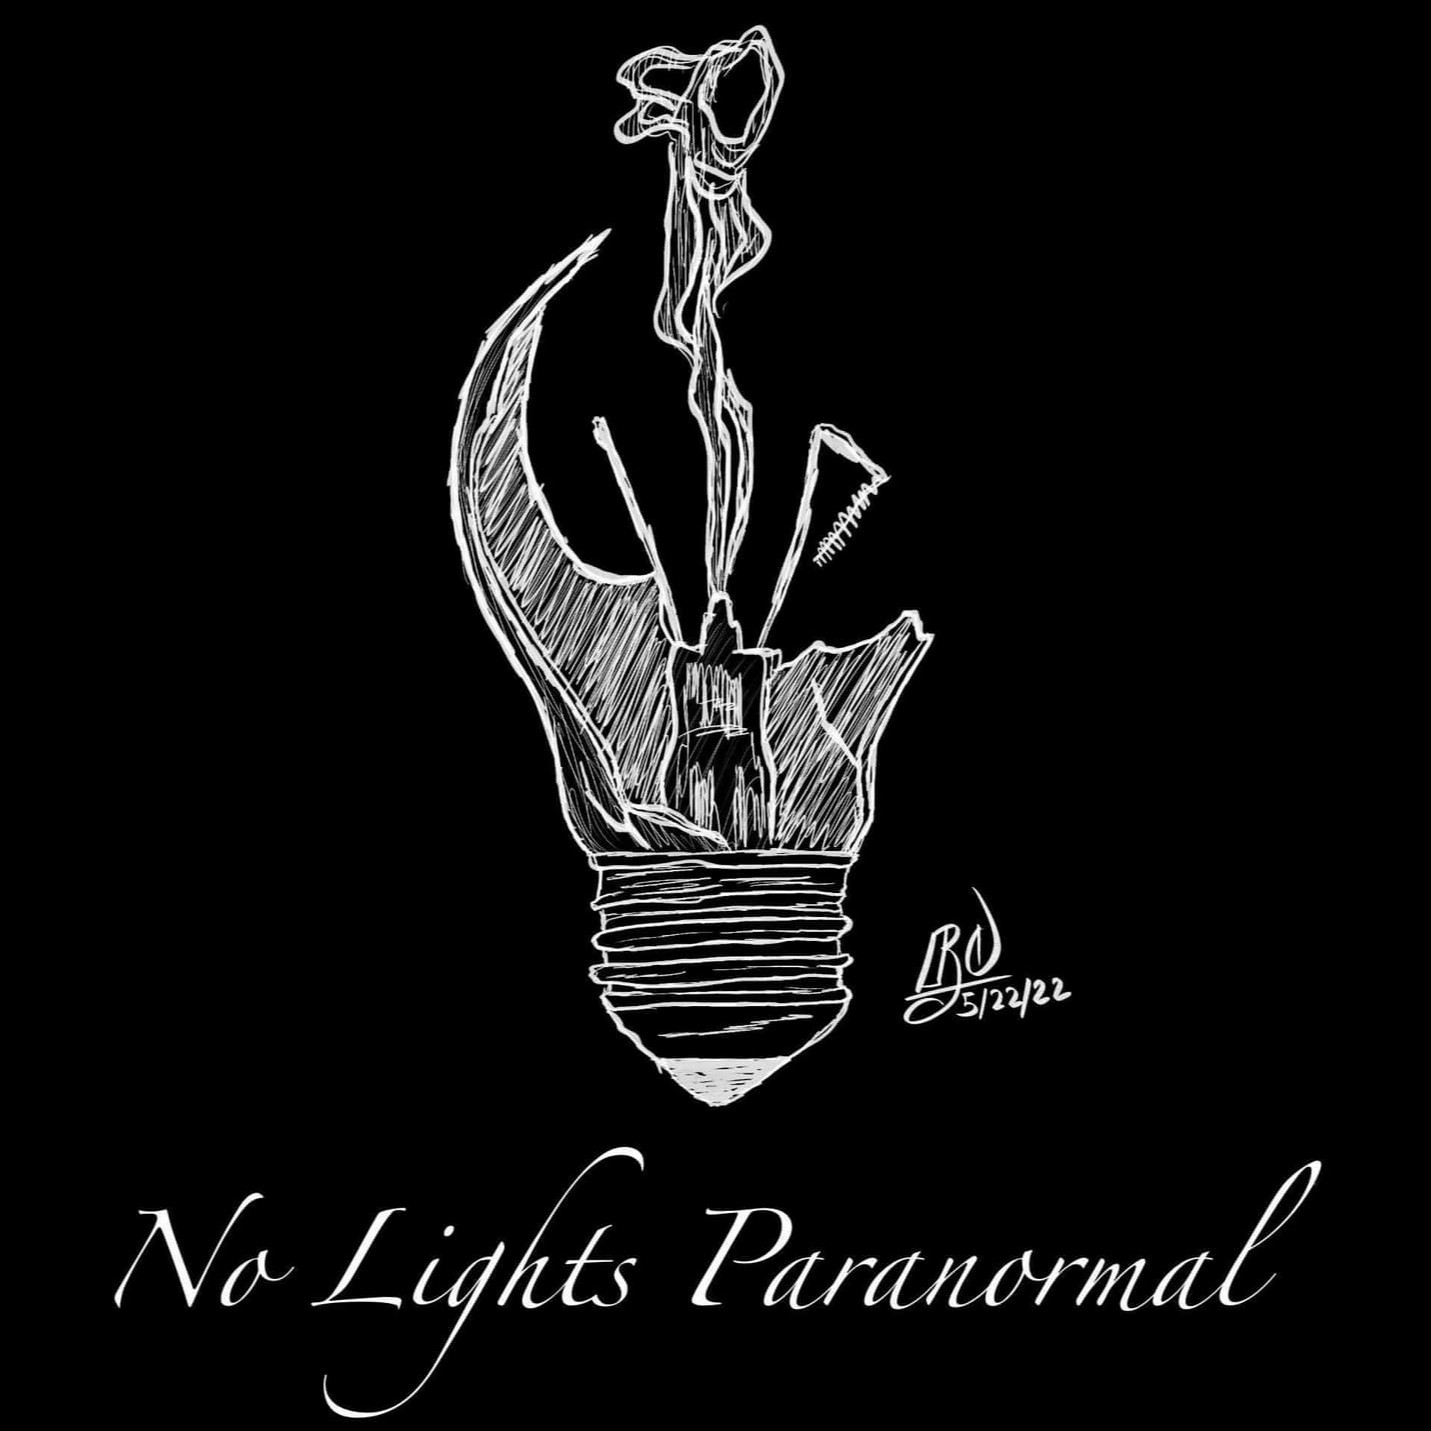 No Lights Paranormal